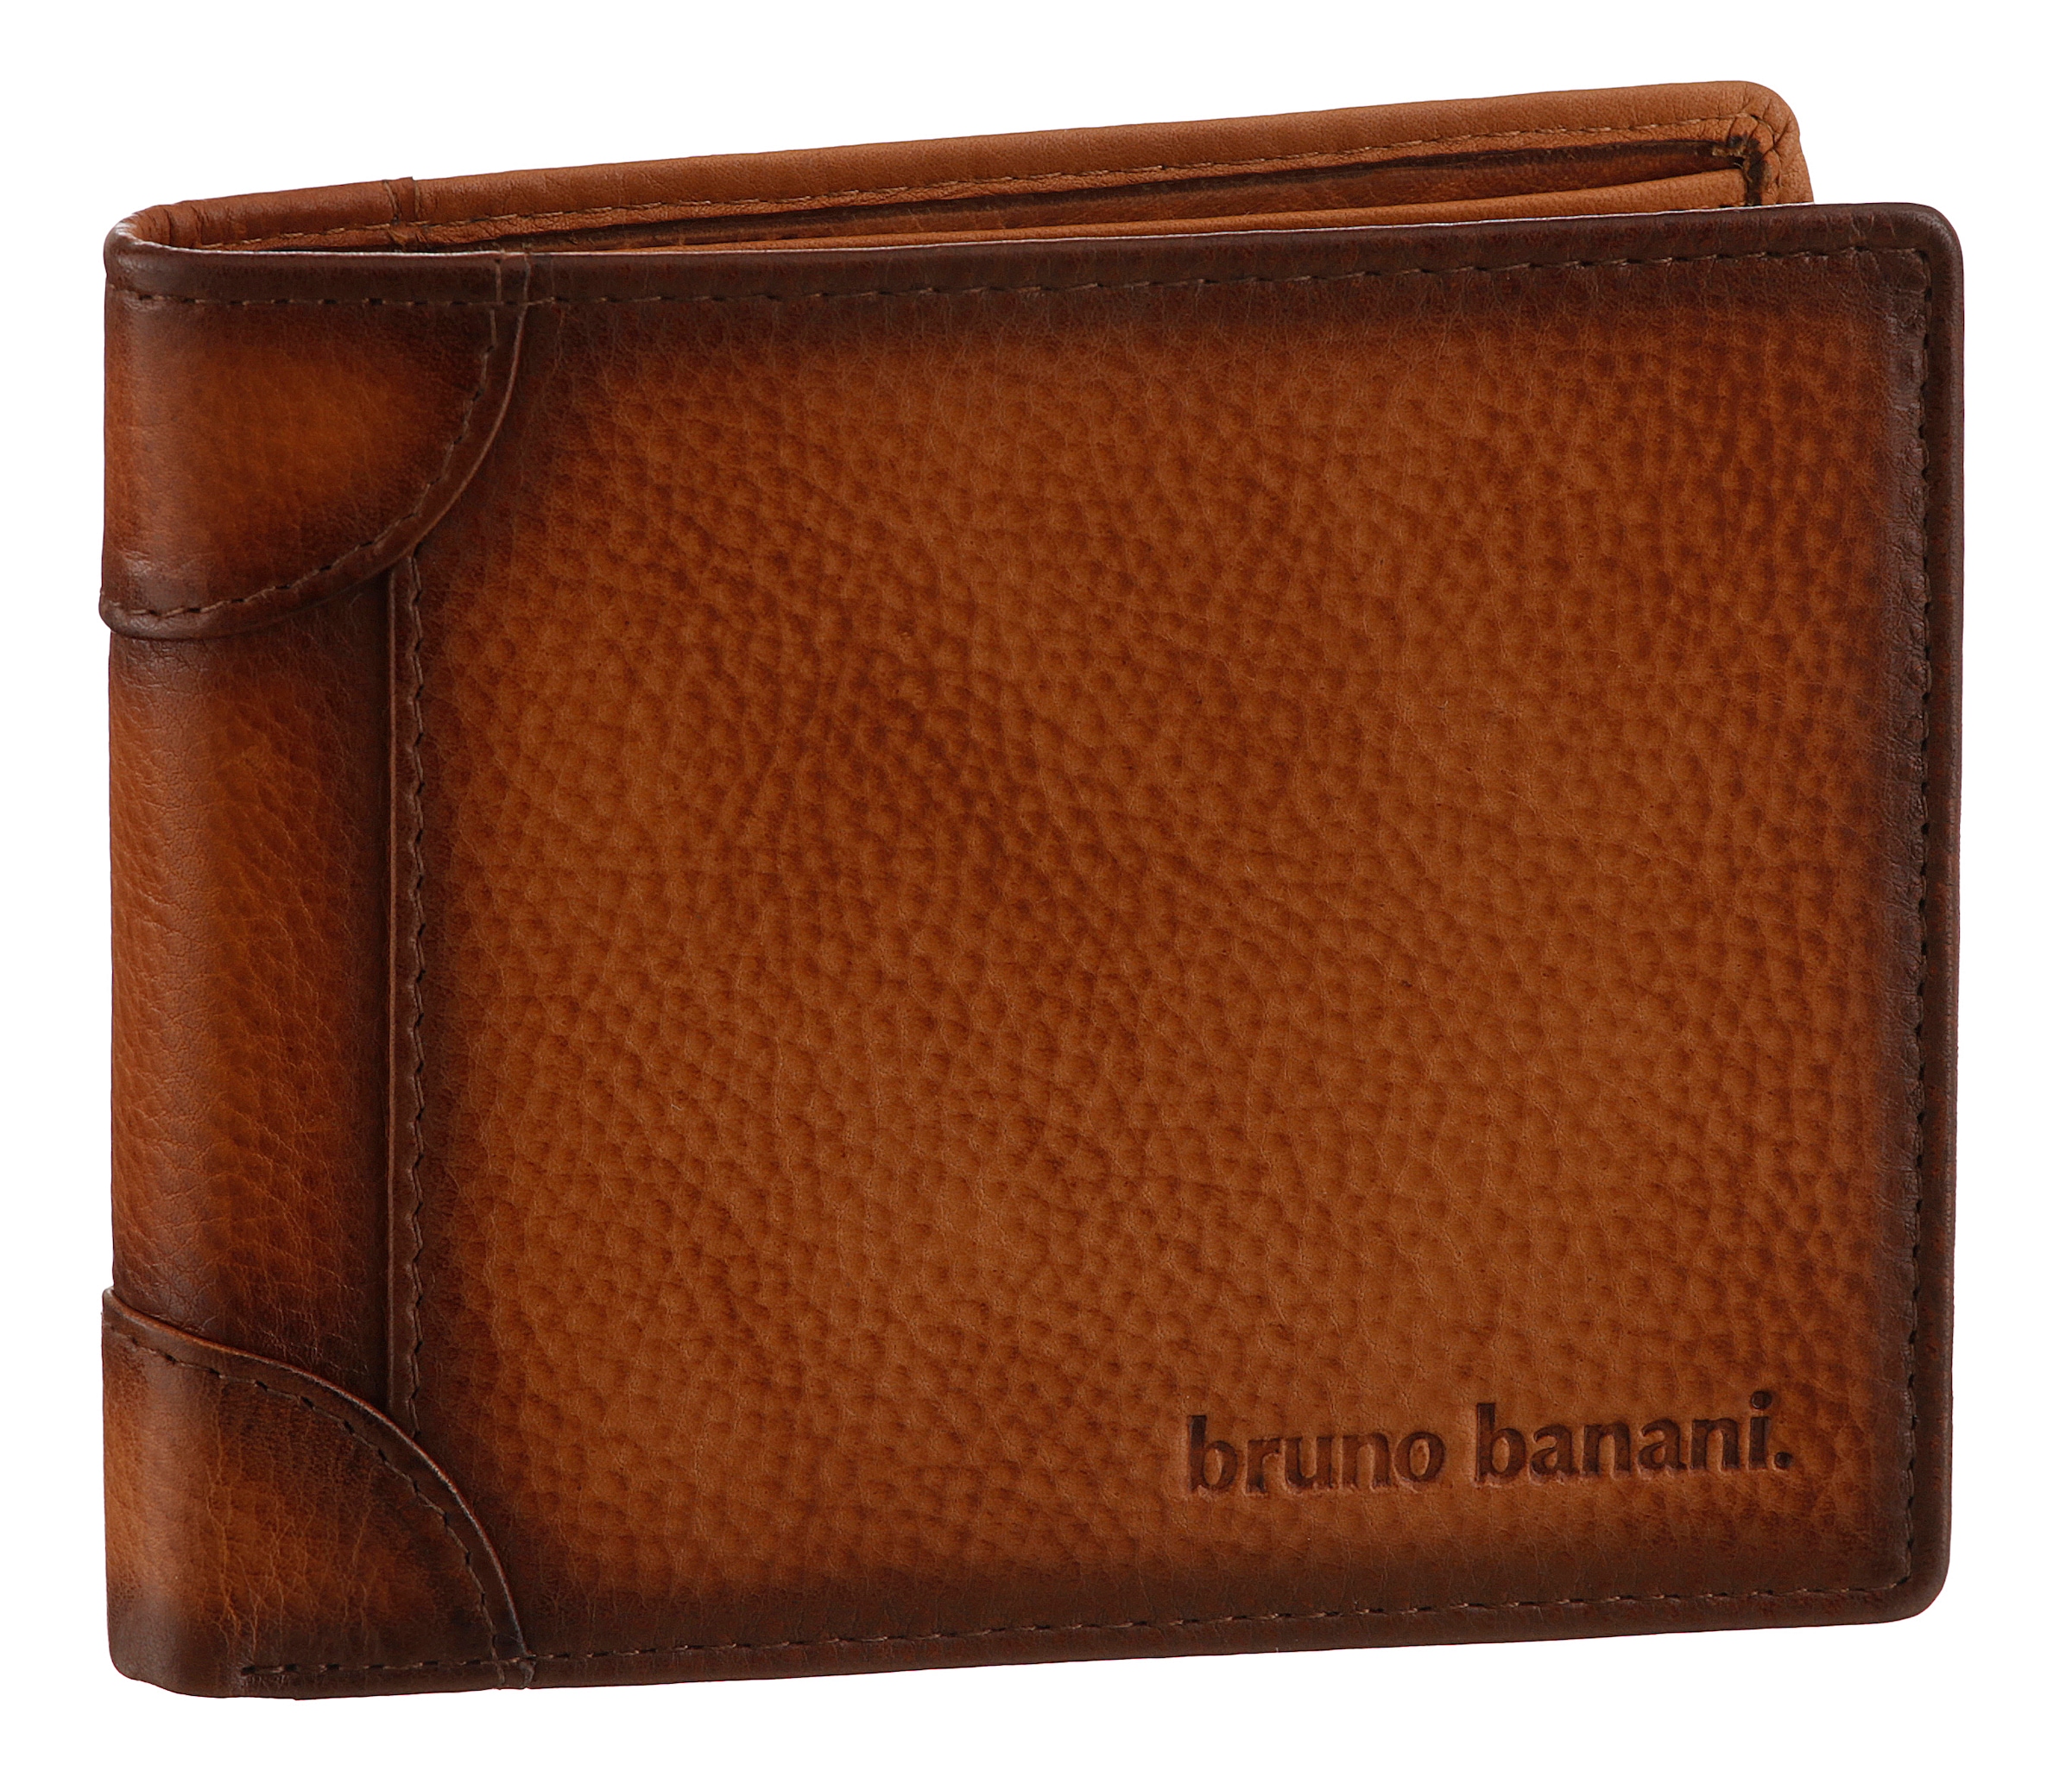 Bruno Banani Geldbörse, aus echtem Leder